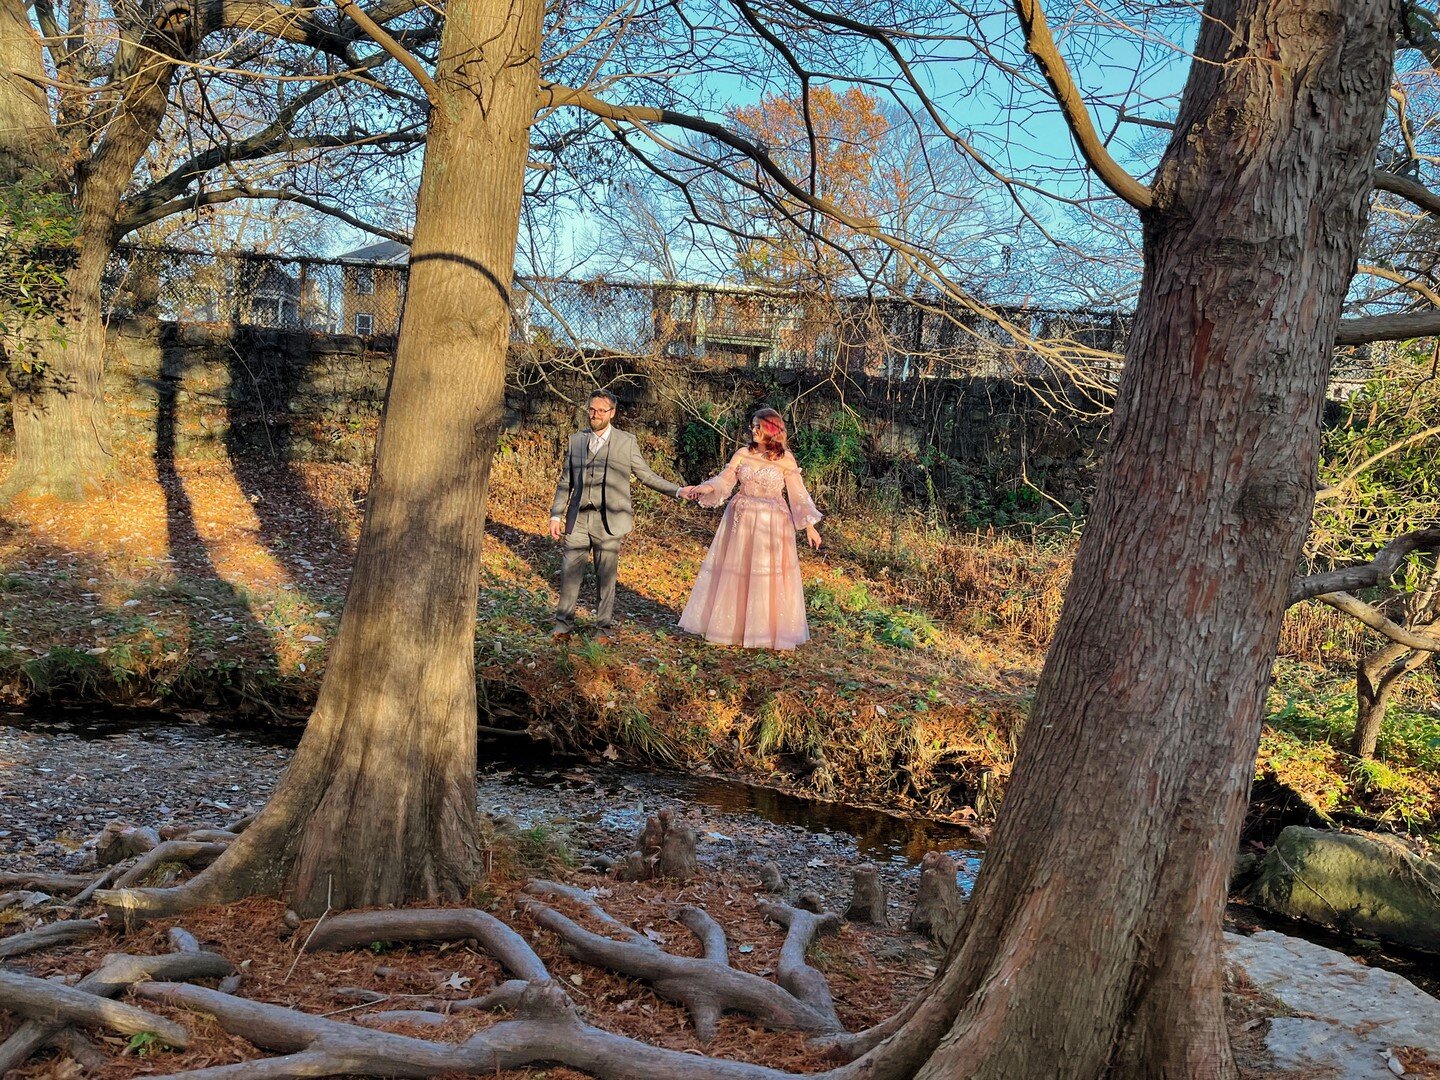 #couple #arnoldarboretum #engagement #pink #inthepink #seeingpink #Boston
#documentaryphotography
#socialdocumentaryphotography #Bostonphotographer
#docphoto #contemporaryphotography
#womeninphoto #sonyalphafemale